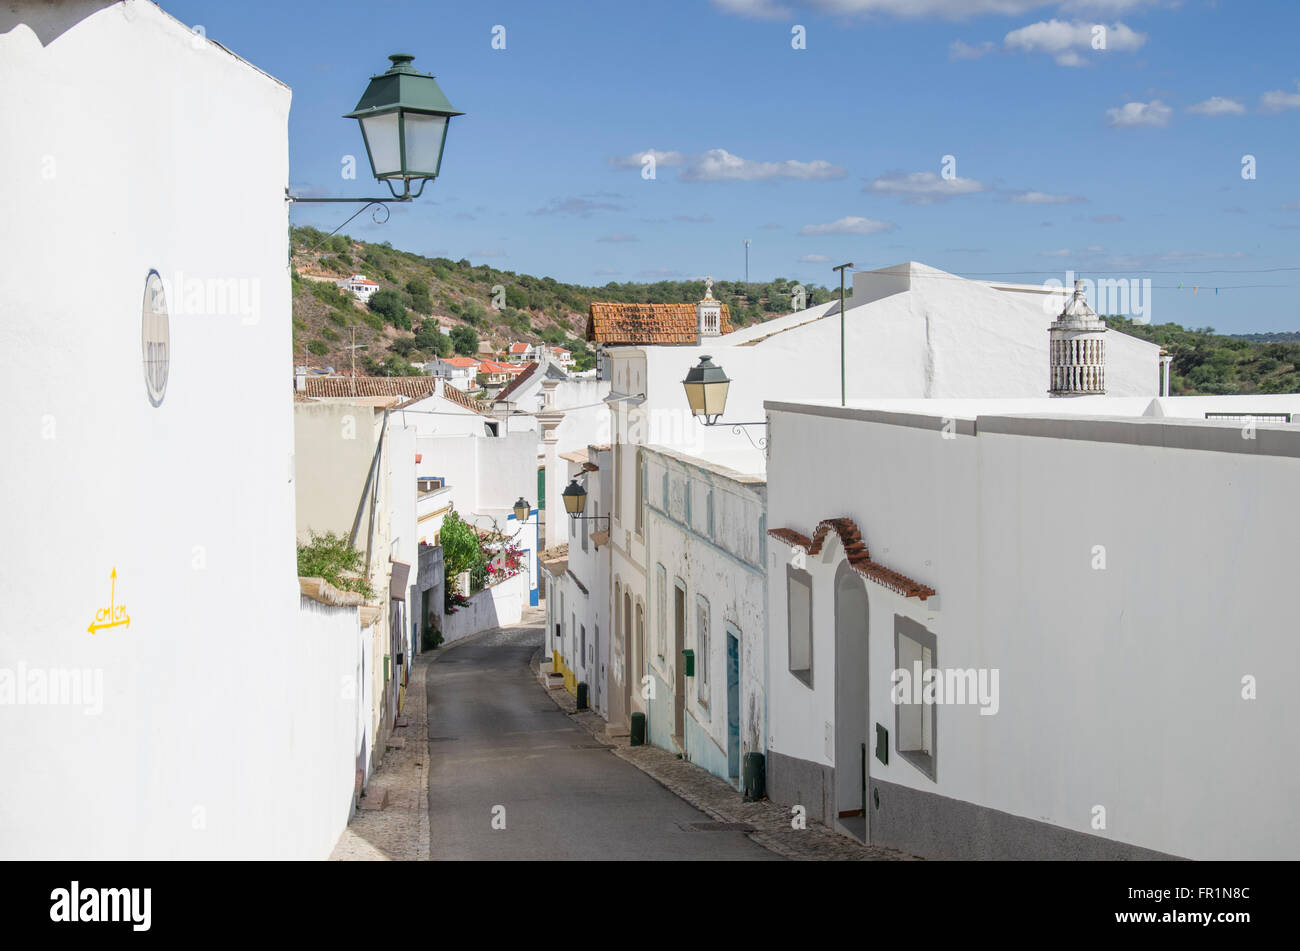 City center, street, Alte city, Algarve, south Portugal, Europe, touristic village Stock Photo